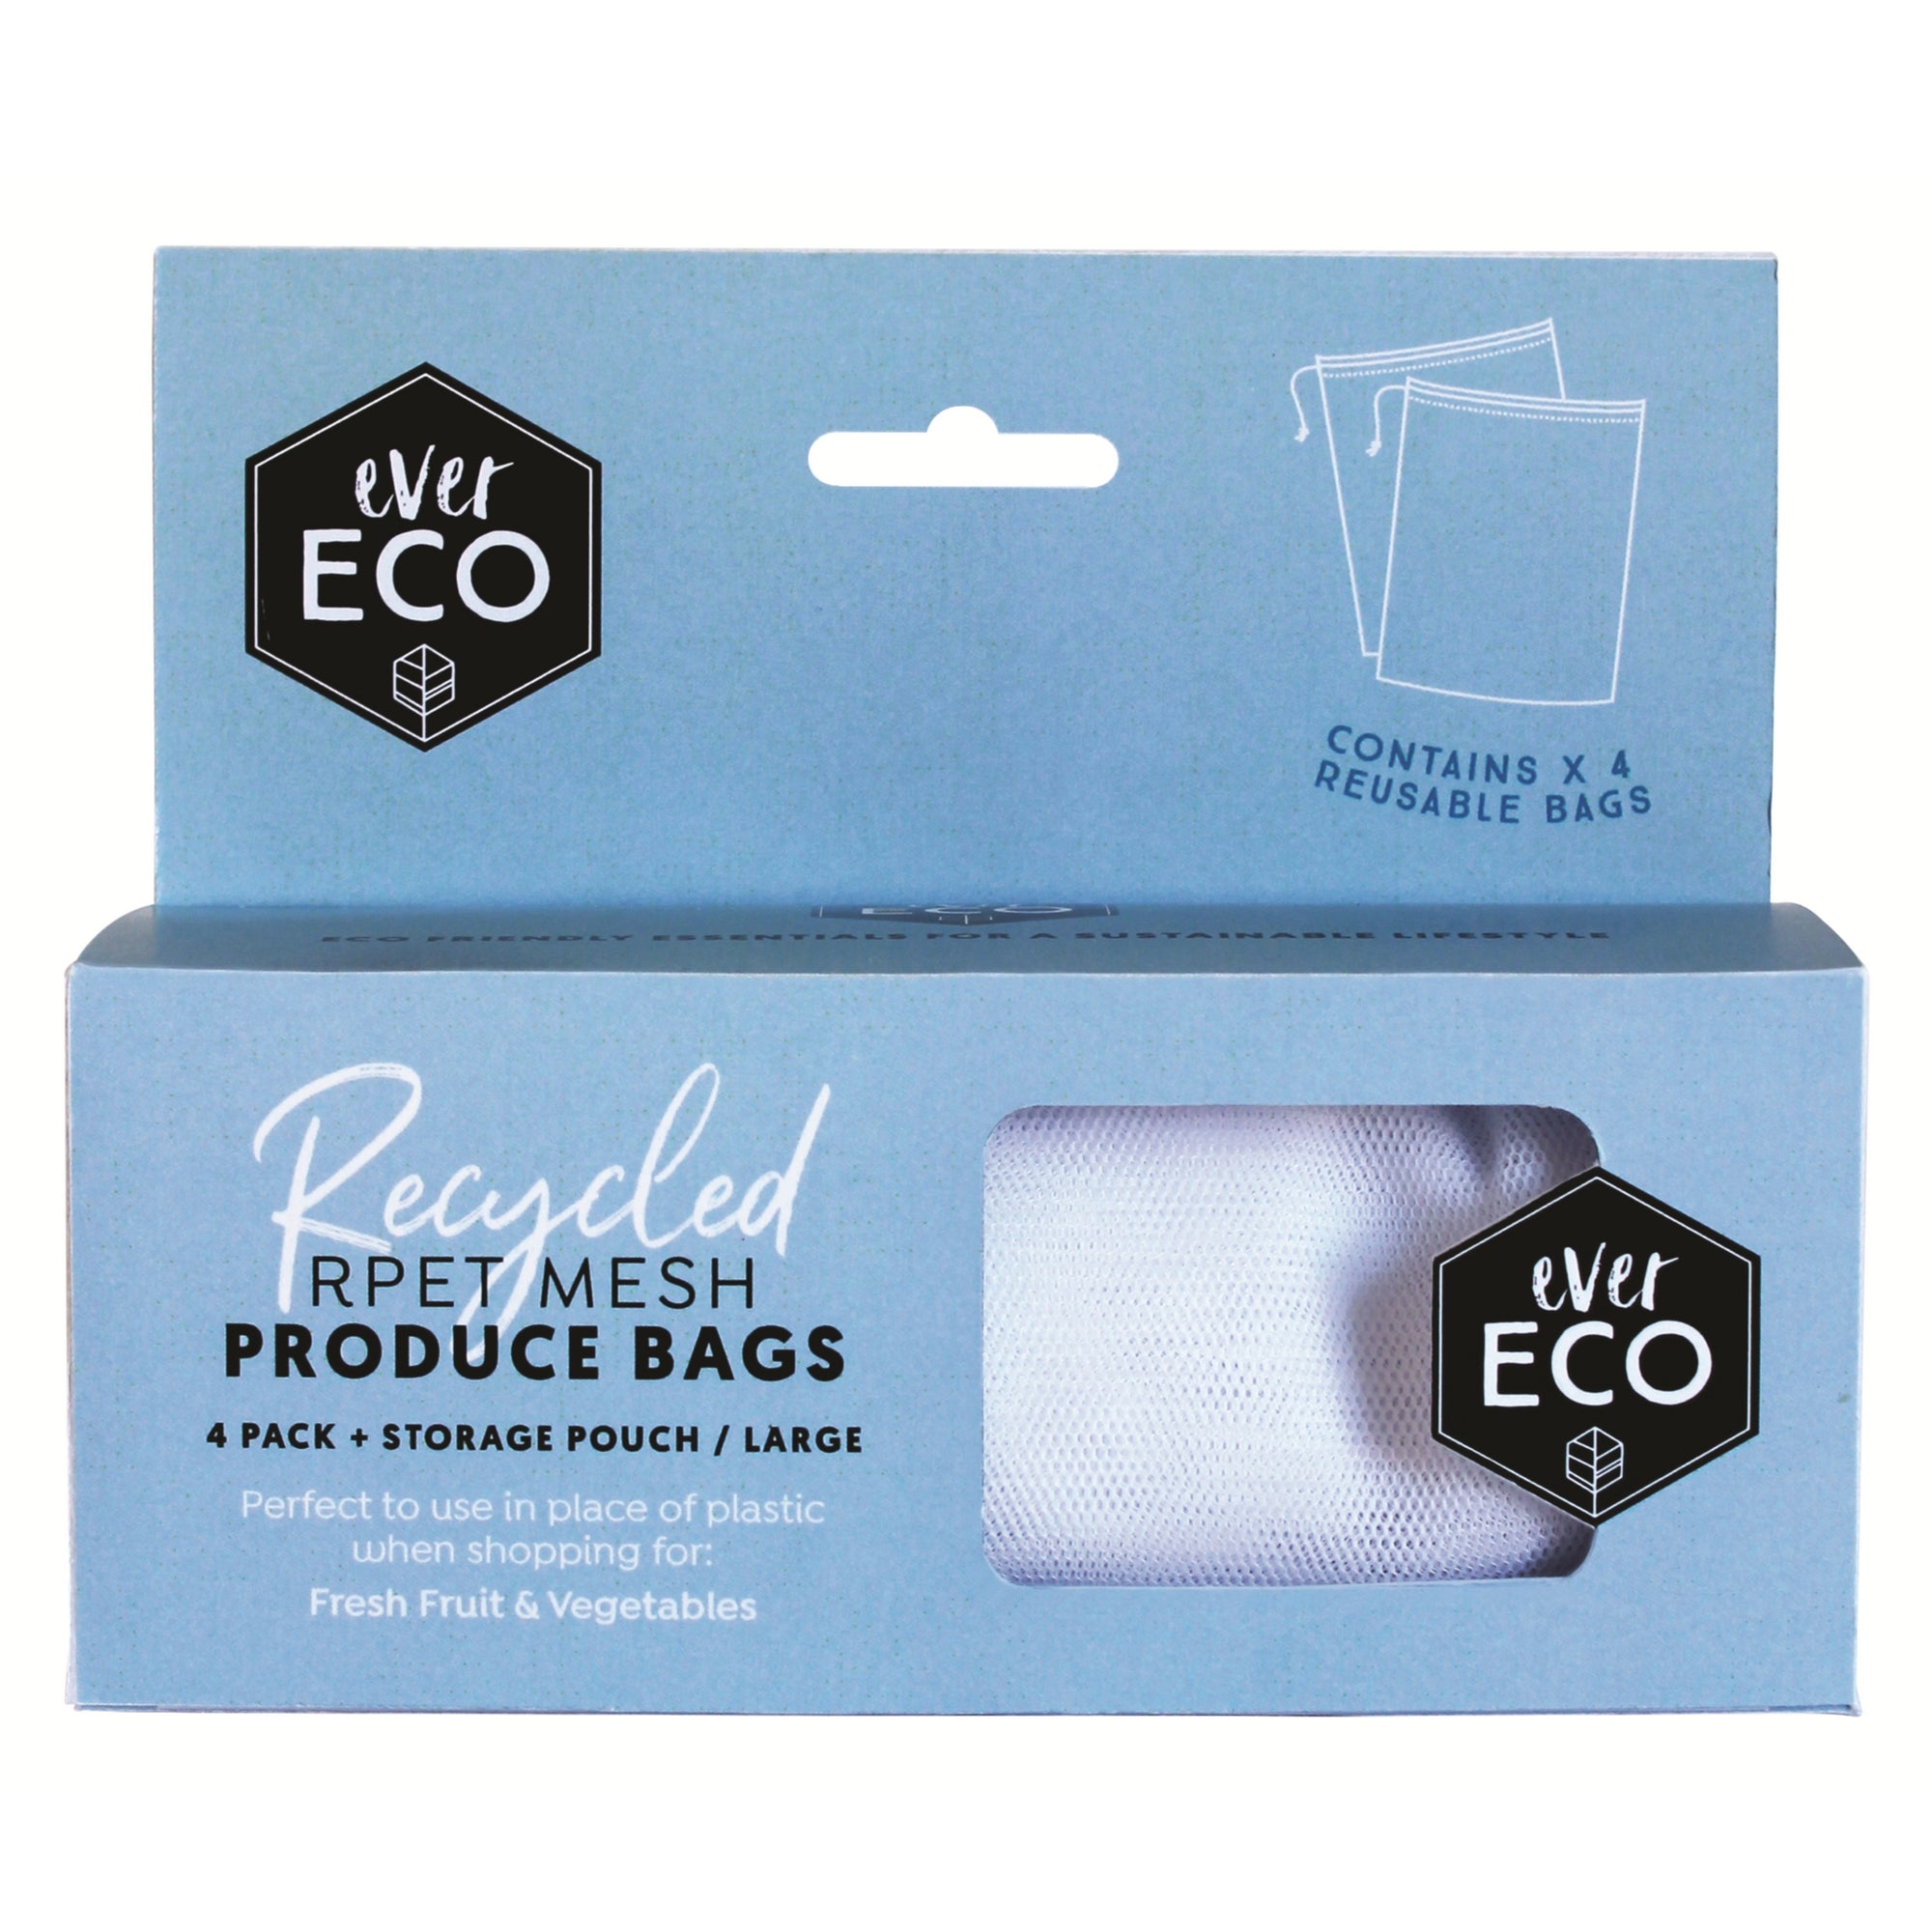 Go-For-Zero-Australia-Ever-Eco-Reusable-Produce-Bags-RPET-Mesh-4-Pack-Storage-Pouch